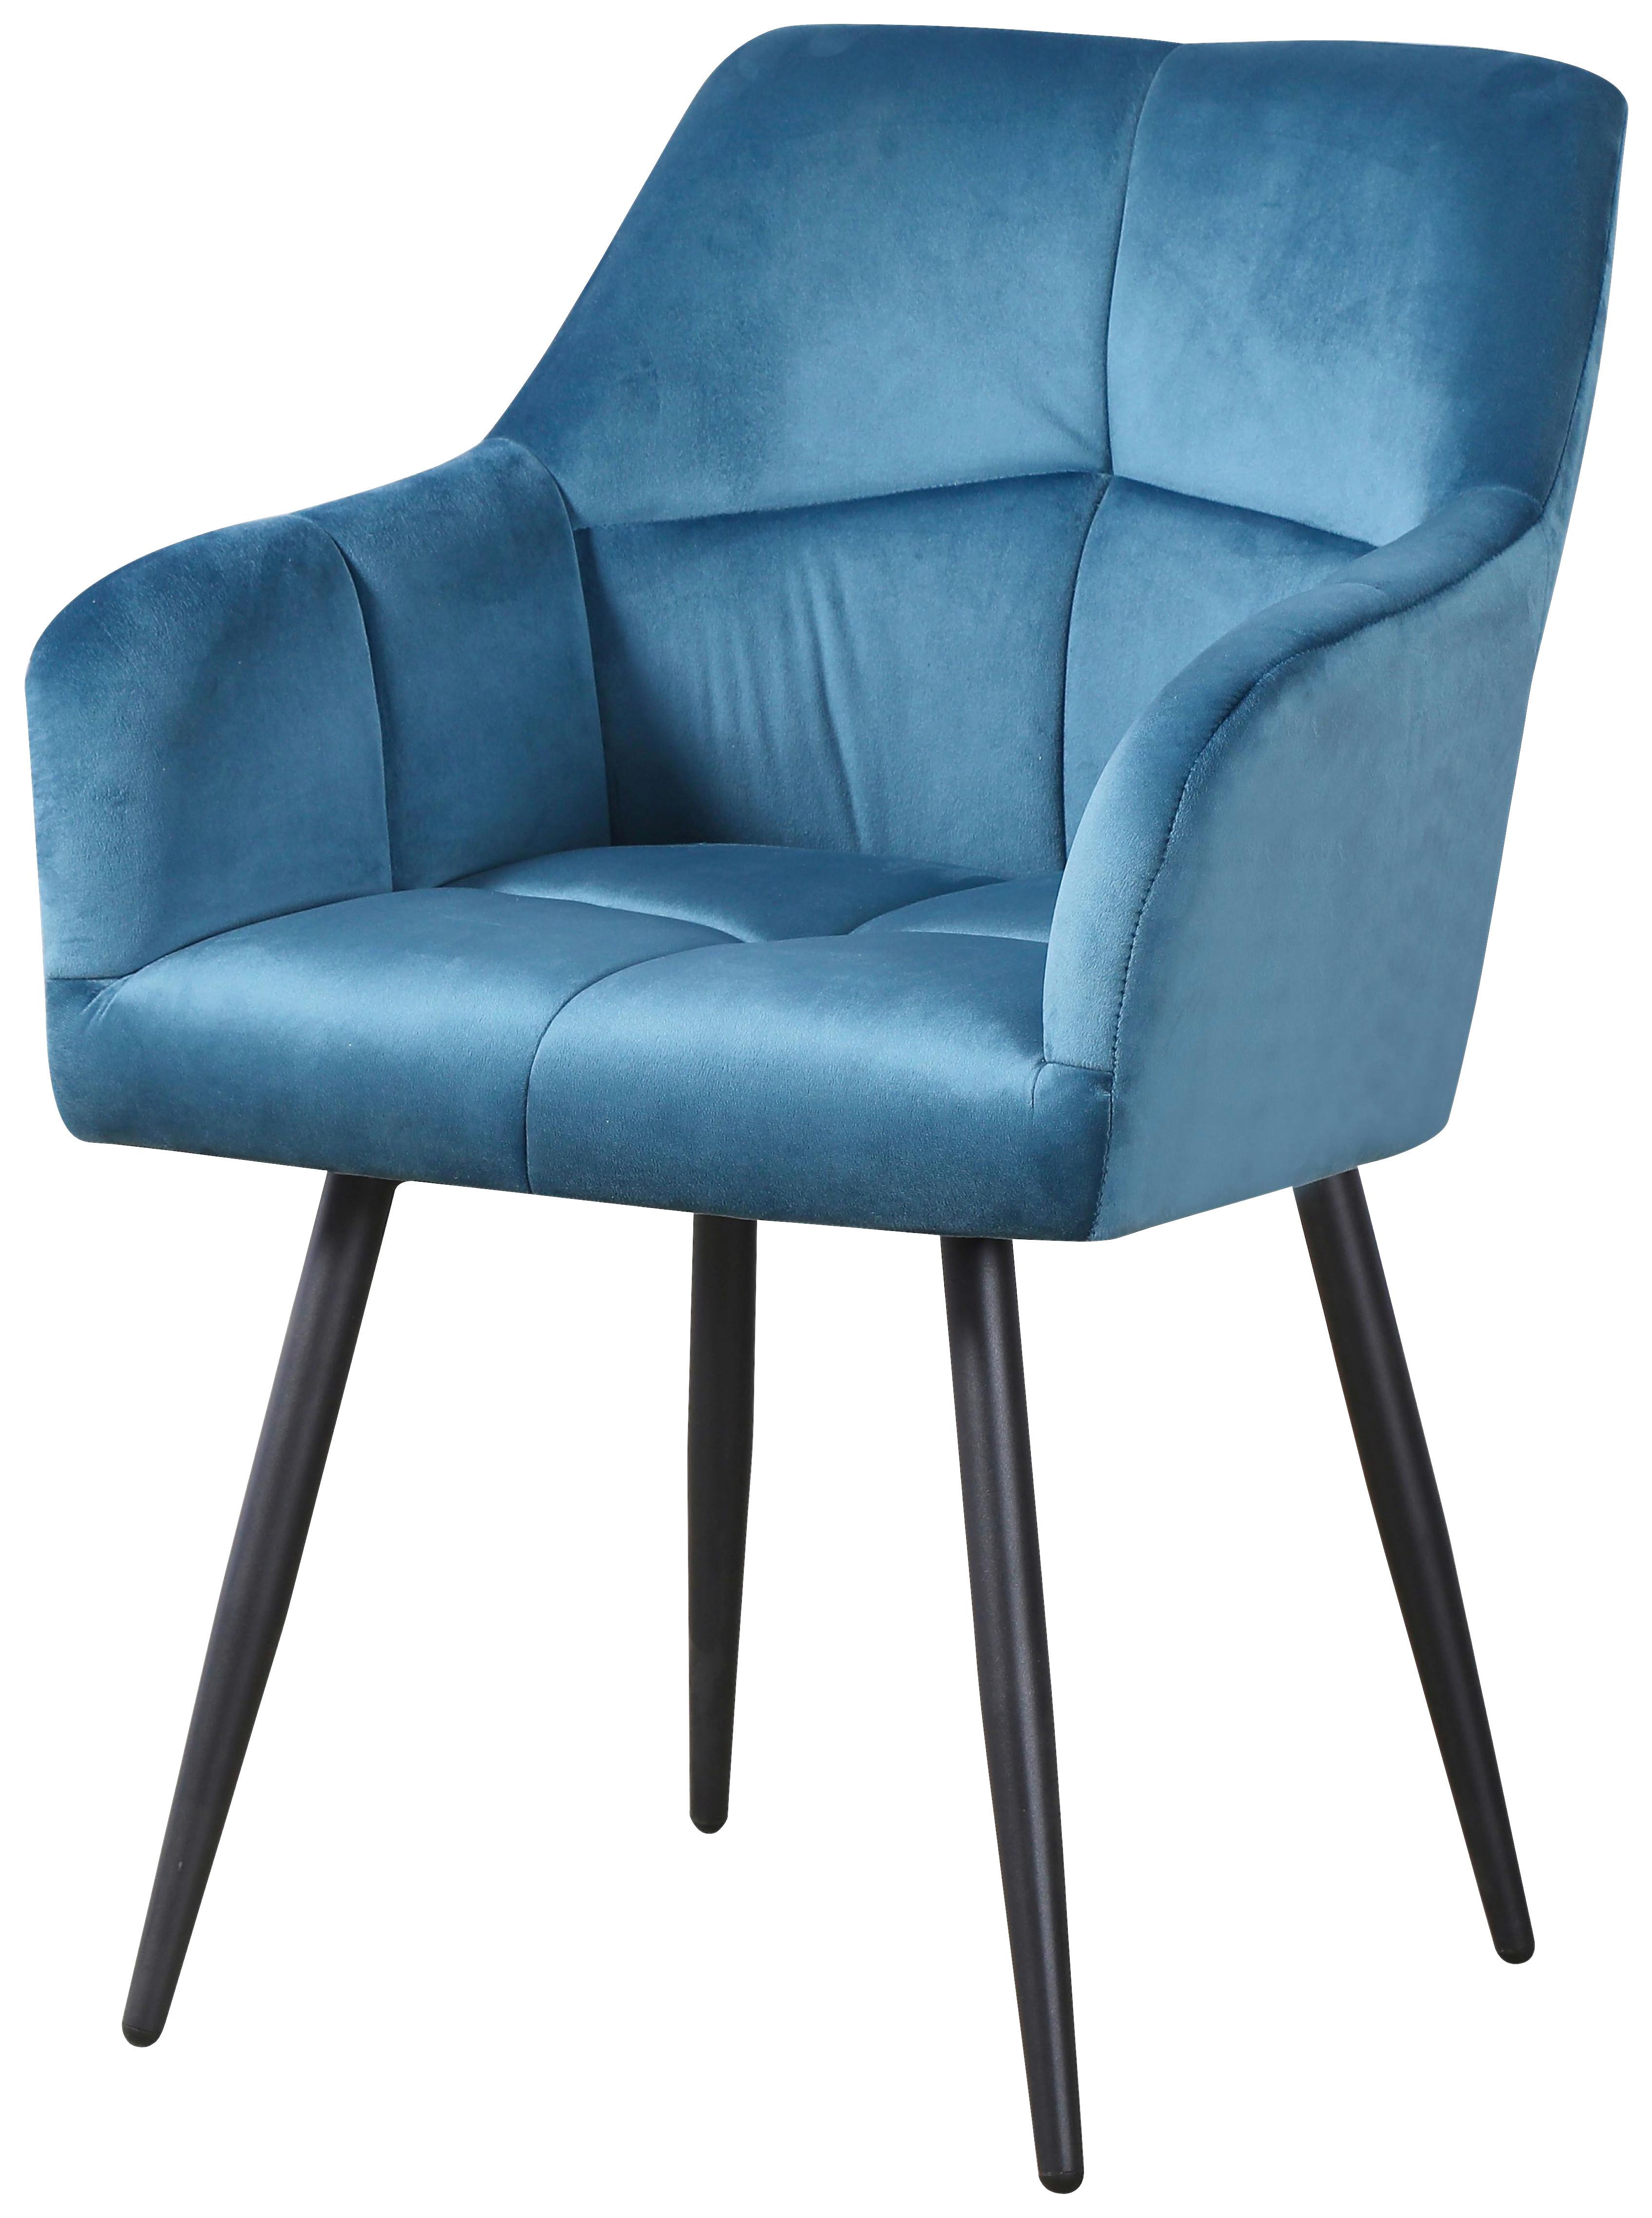 Čtyřnohá Židle Clair - modrá/černá, Moderní, kov/textil (60/86/62cm)